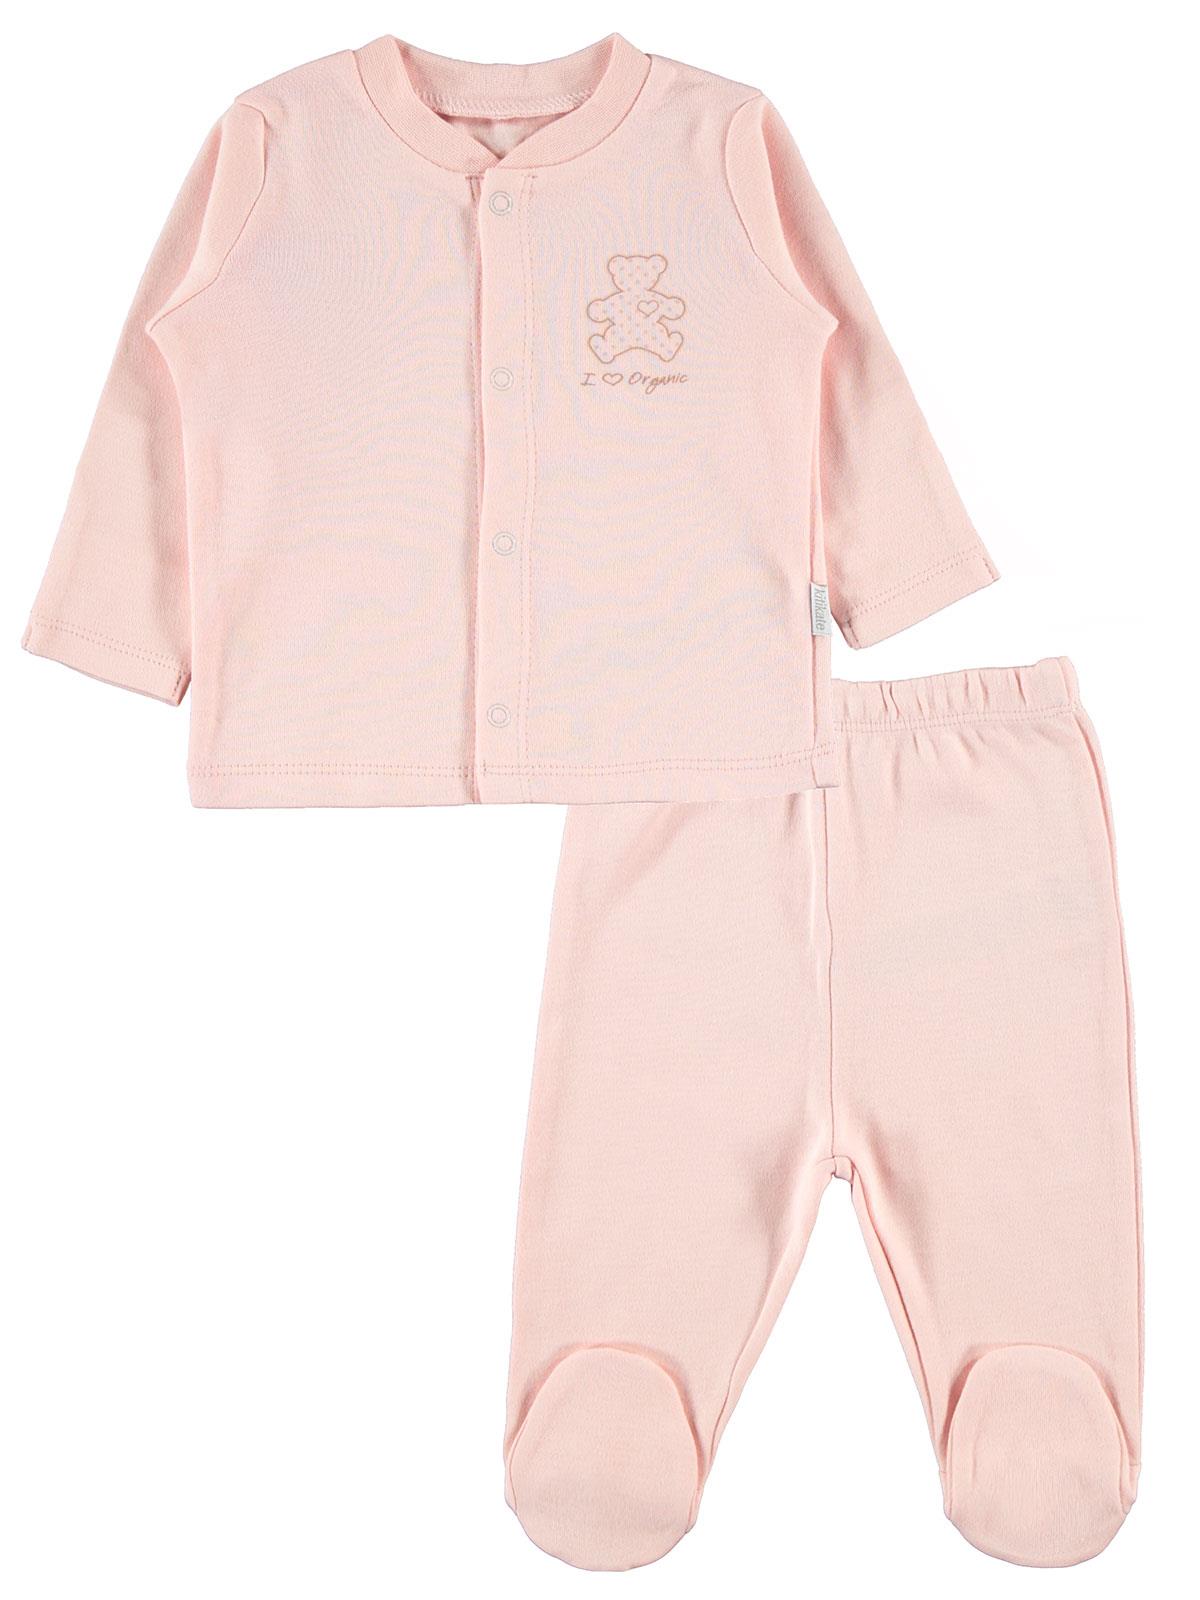 Baby Center Organik Penye Pijama Takımı 0-6 Ay Pembe